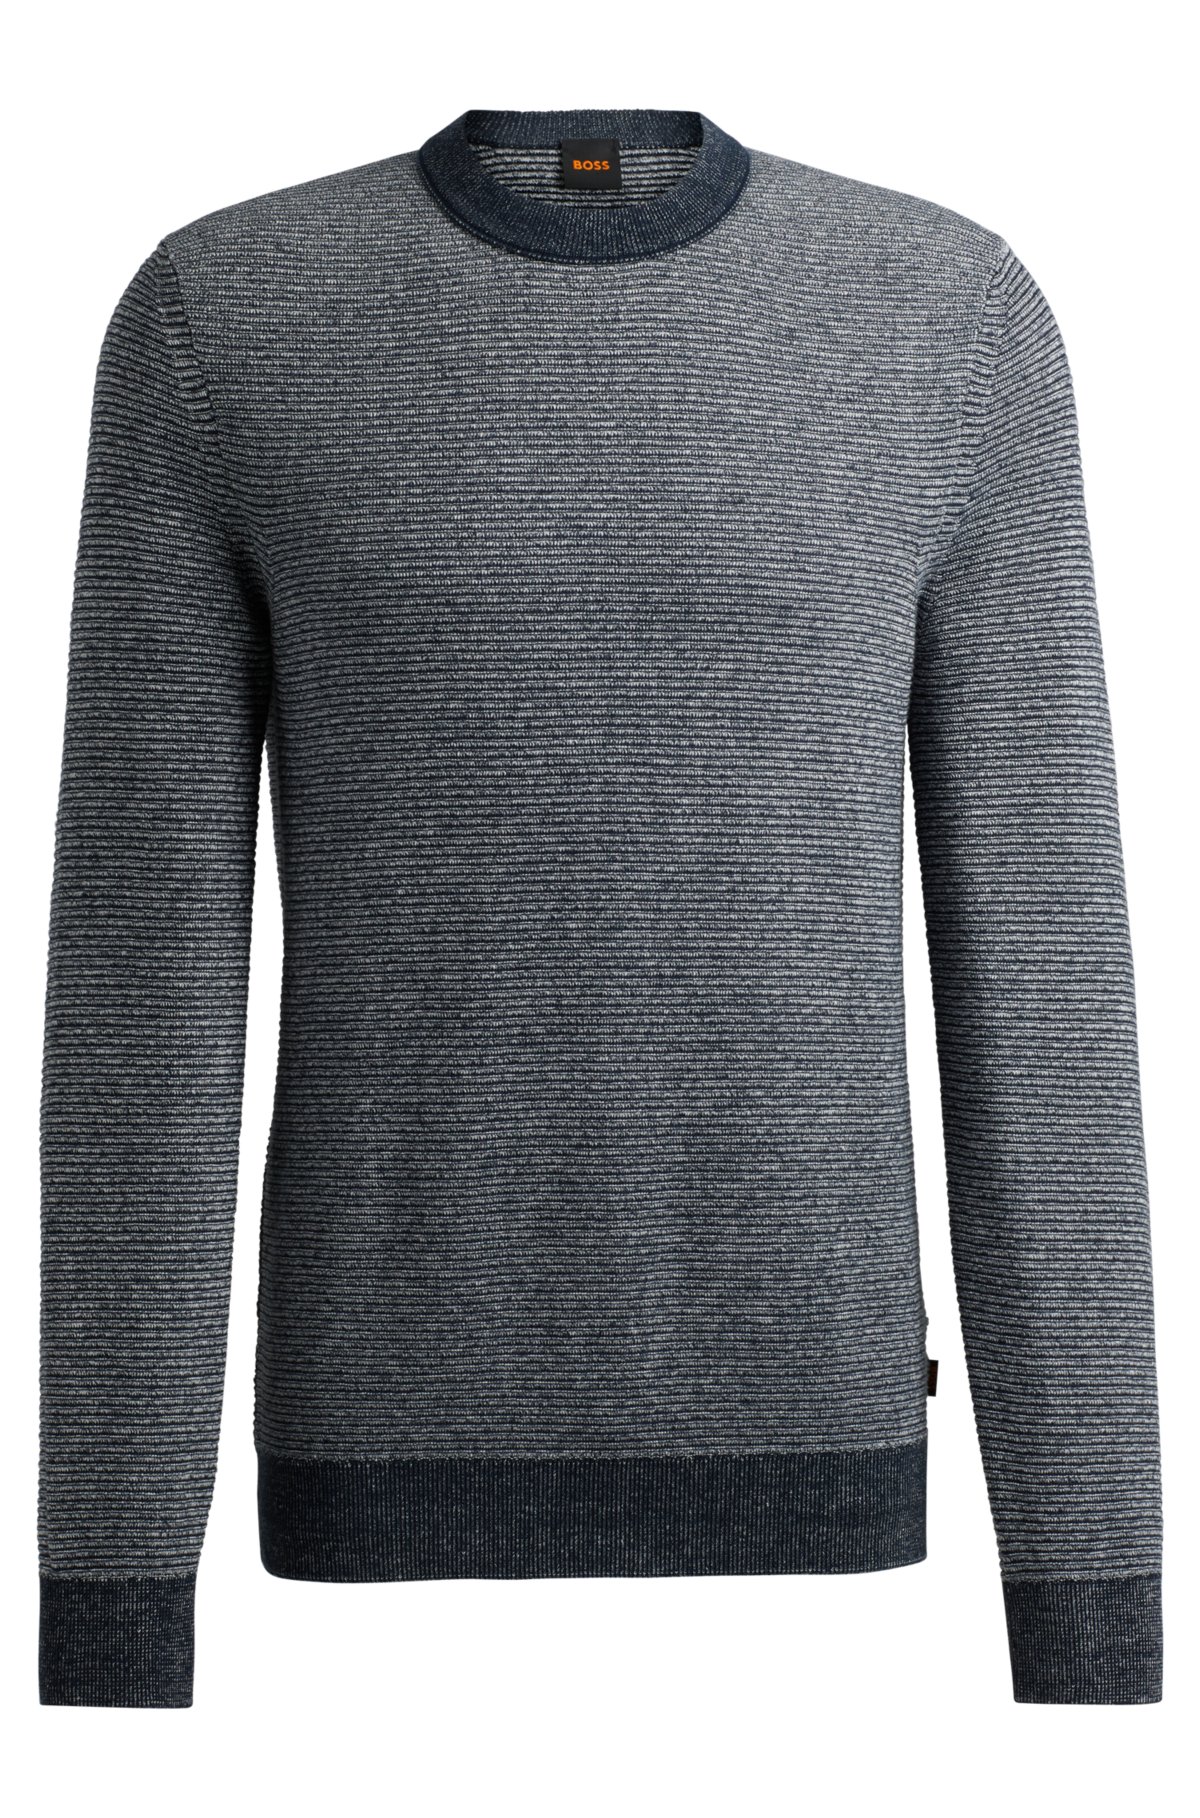 Cotton-blend sweater with mouliné effect, Dark Blue